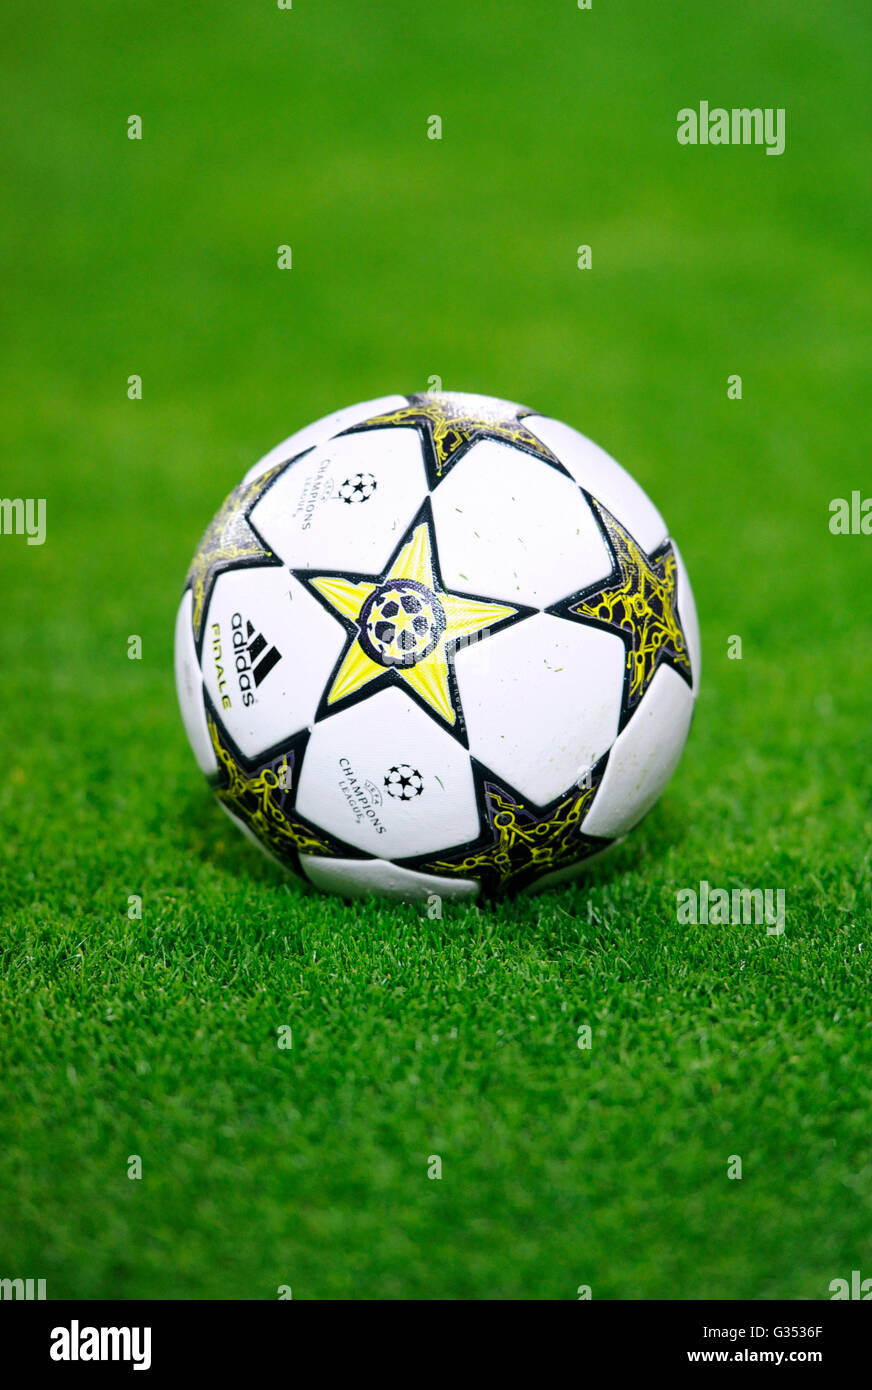 Balon de futbolcon estrellas fotografías e imágenes de alta resolución -  Alamy